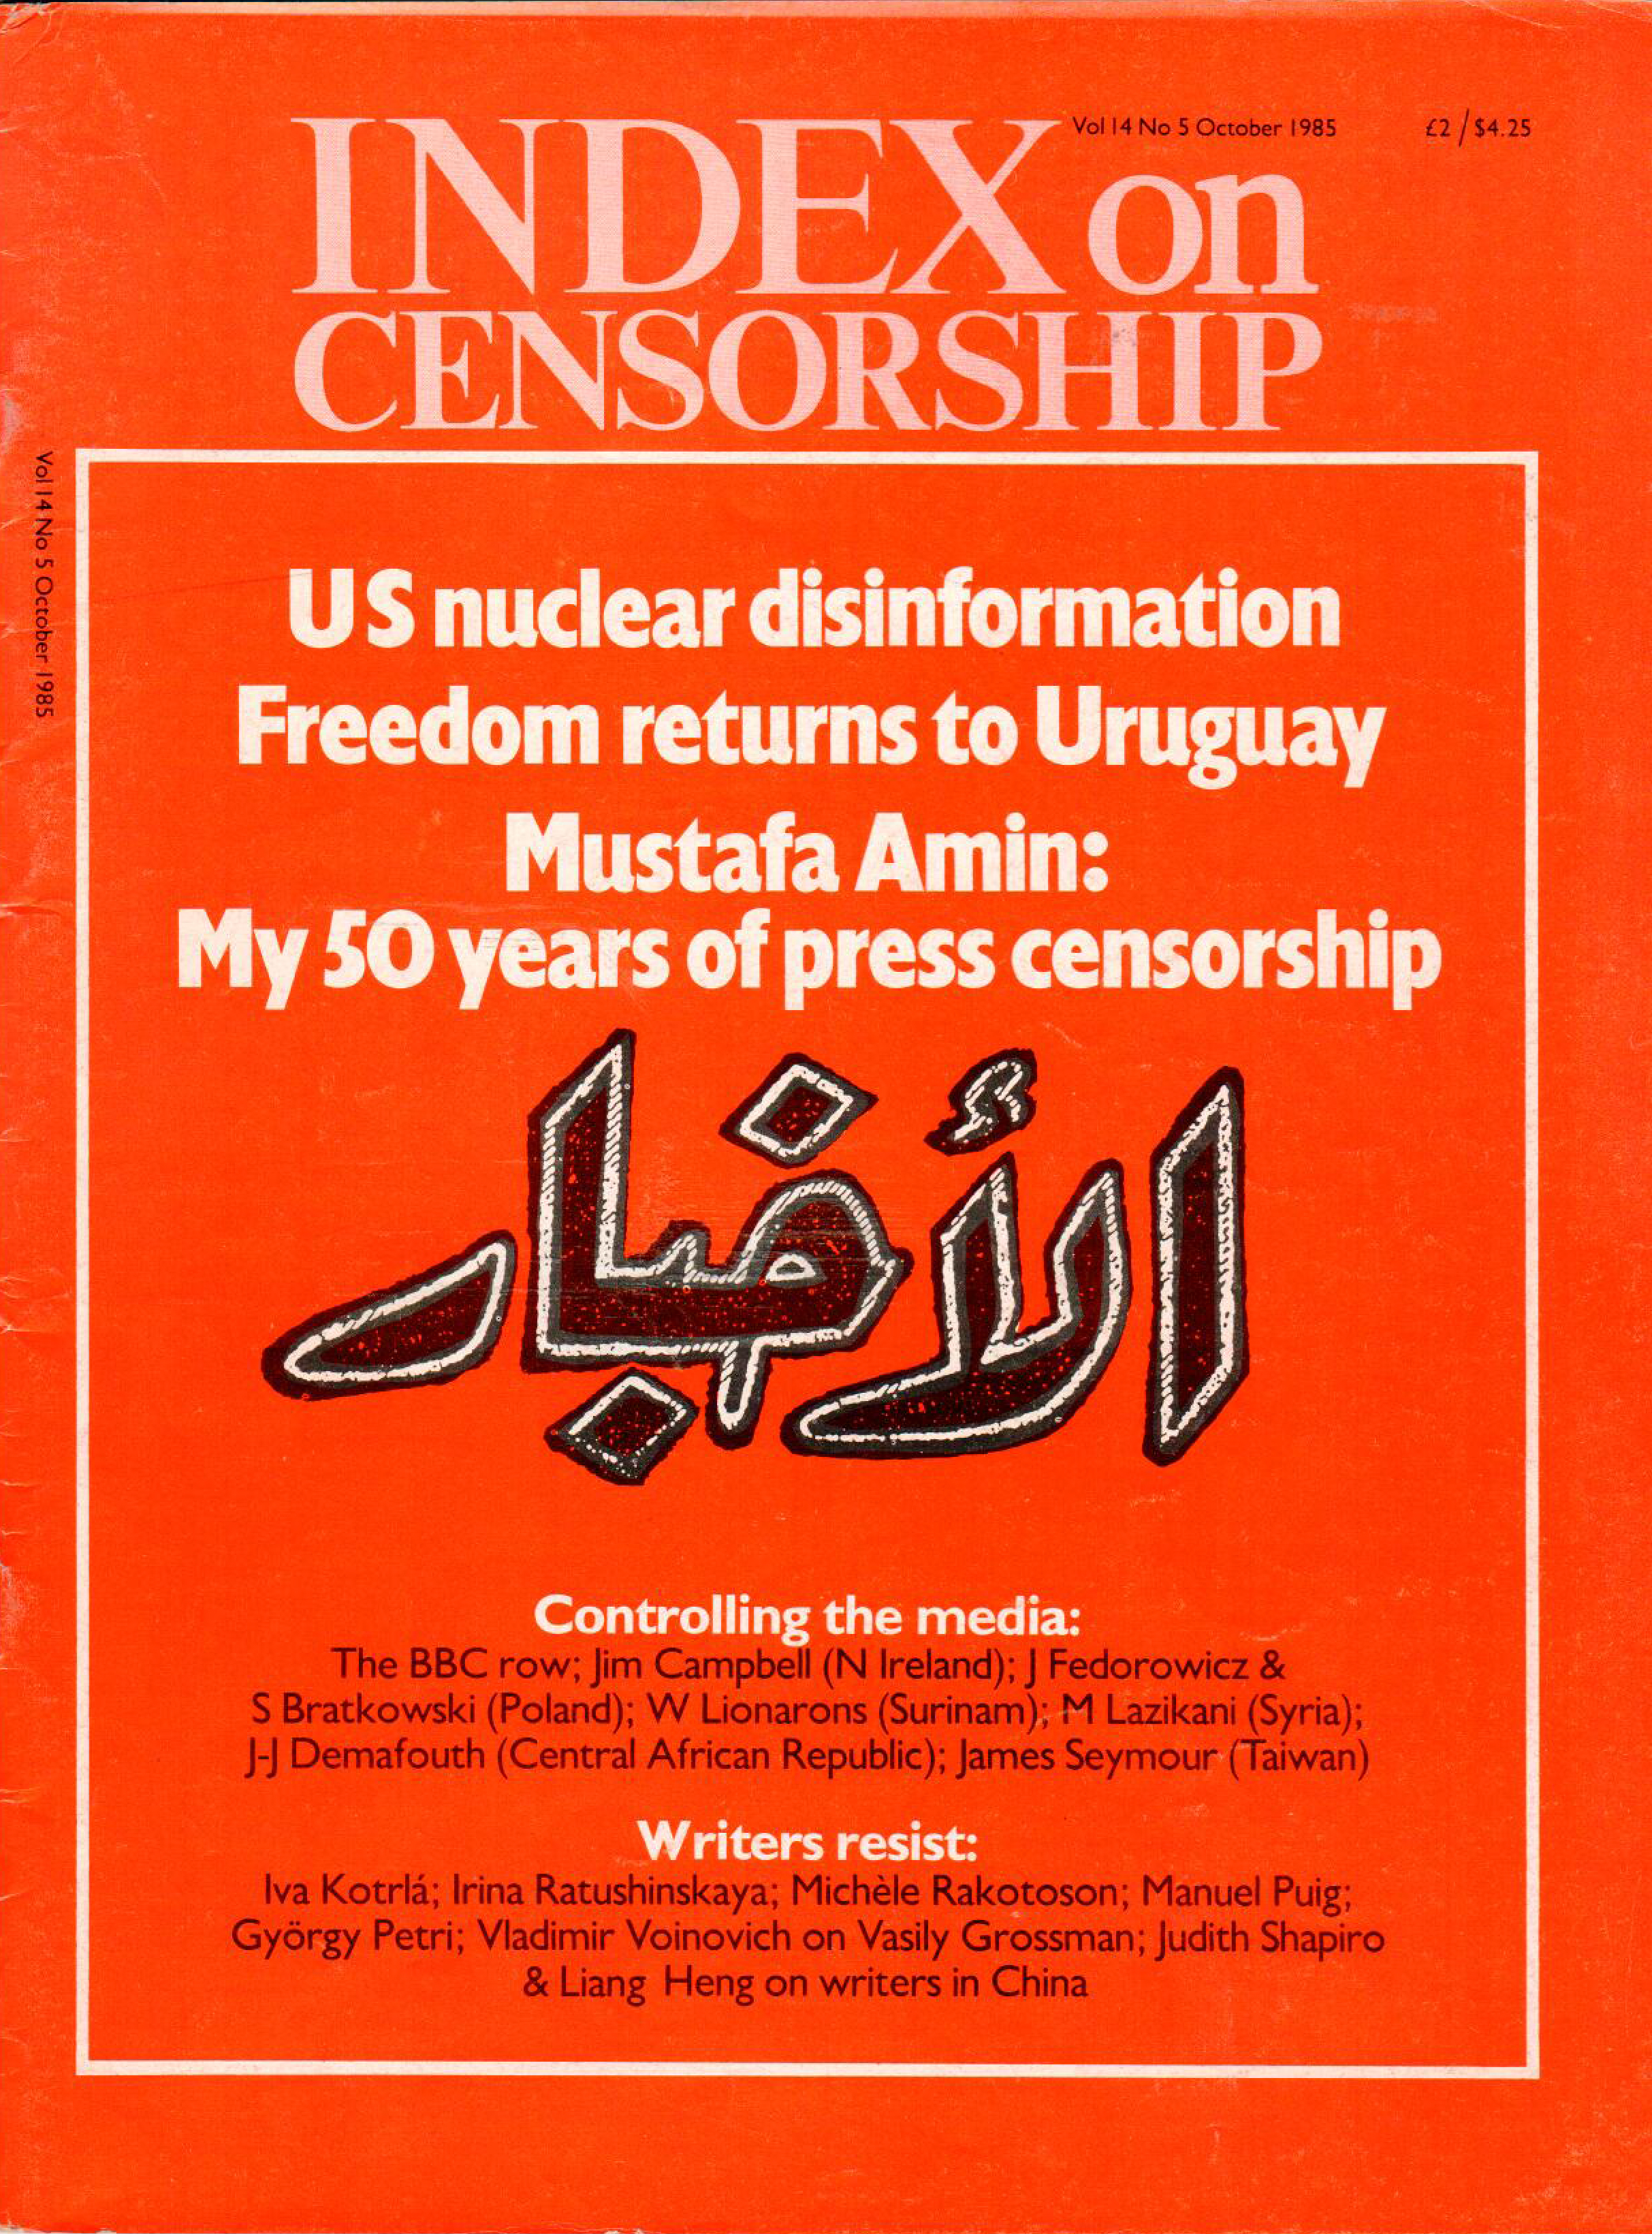 Mustafa Amin: my 50 years of press censorship, the October 1985 issue of Index on Censorship magazine.